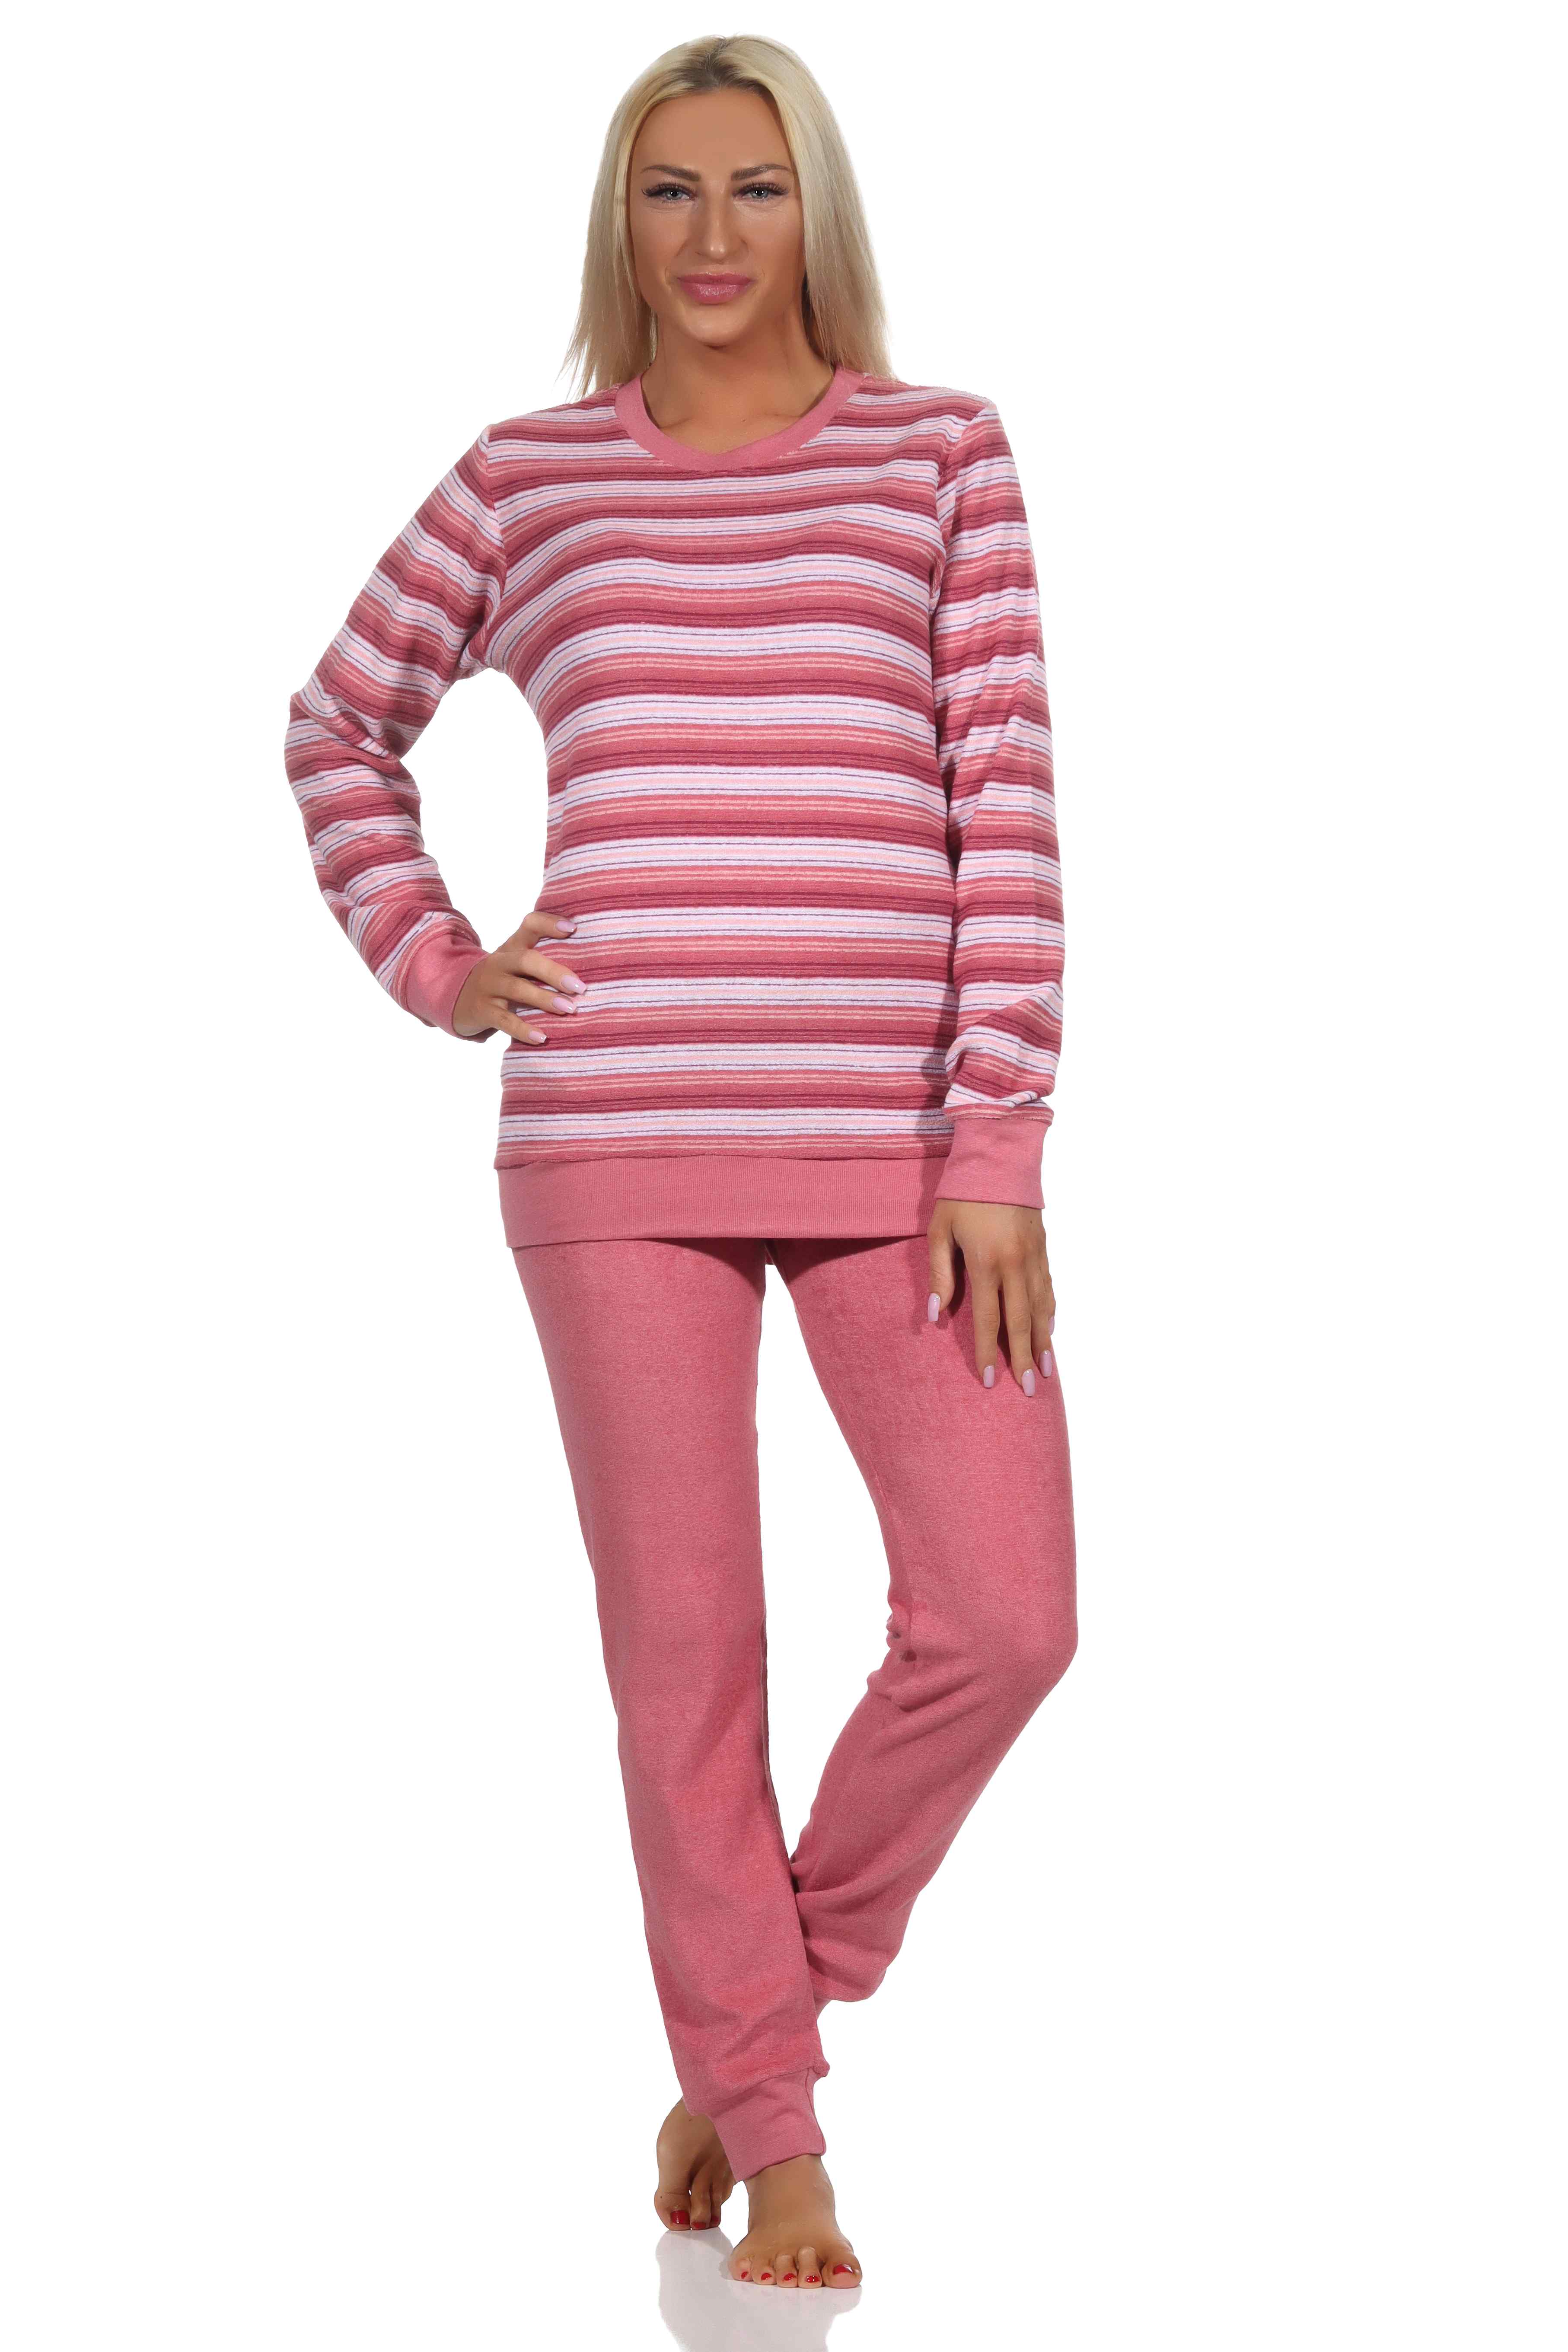 Normann dames badstof pyjama Creative 70264 - Rose - XL 48/50